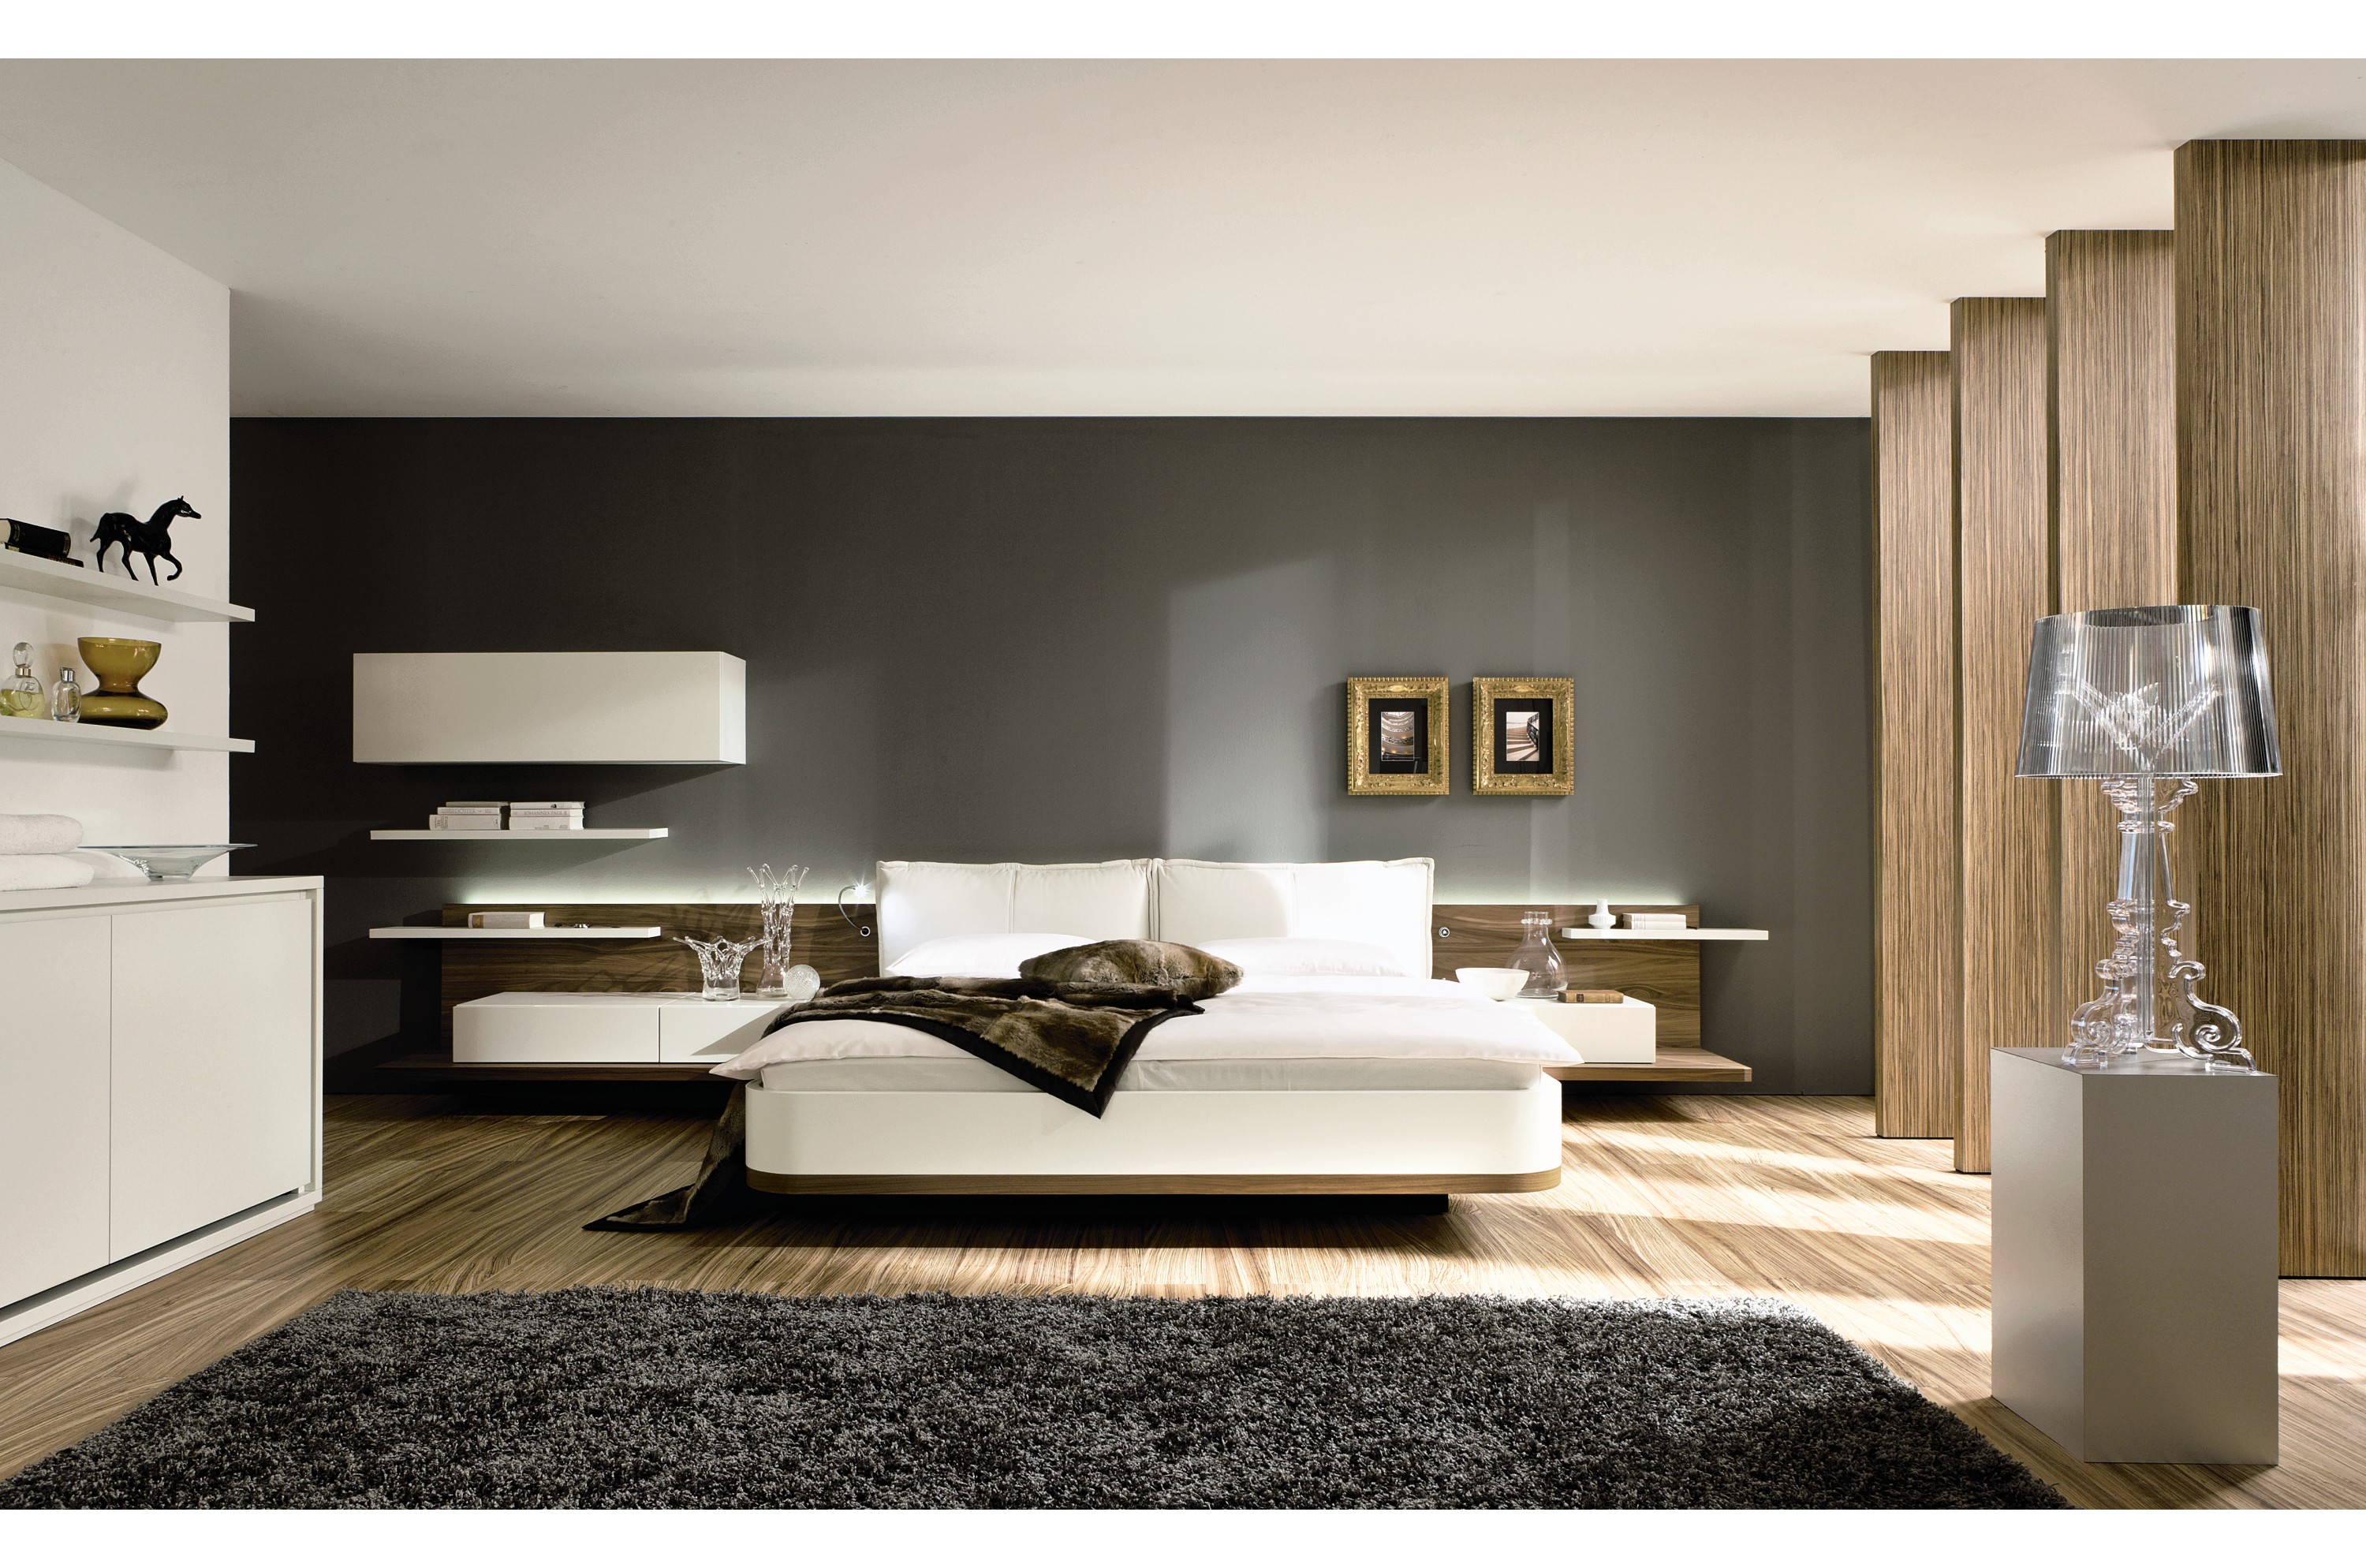 Elegant Simple Wallpaper Designs For Bedrooms On Bedroom With Looking